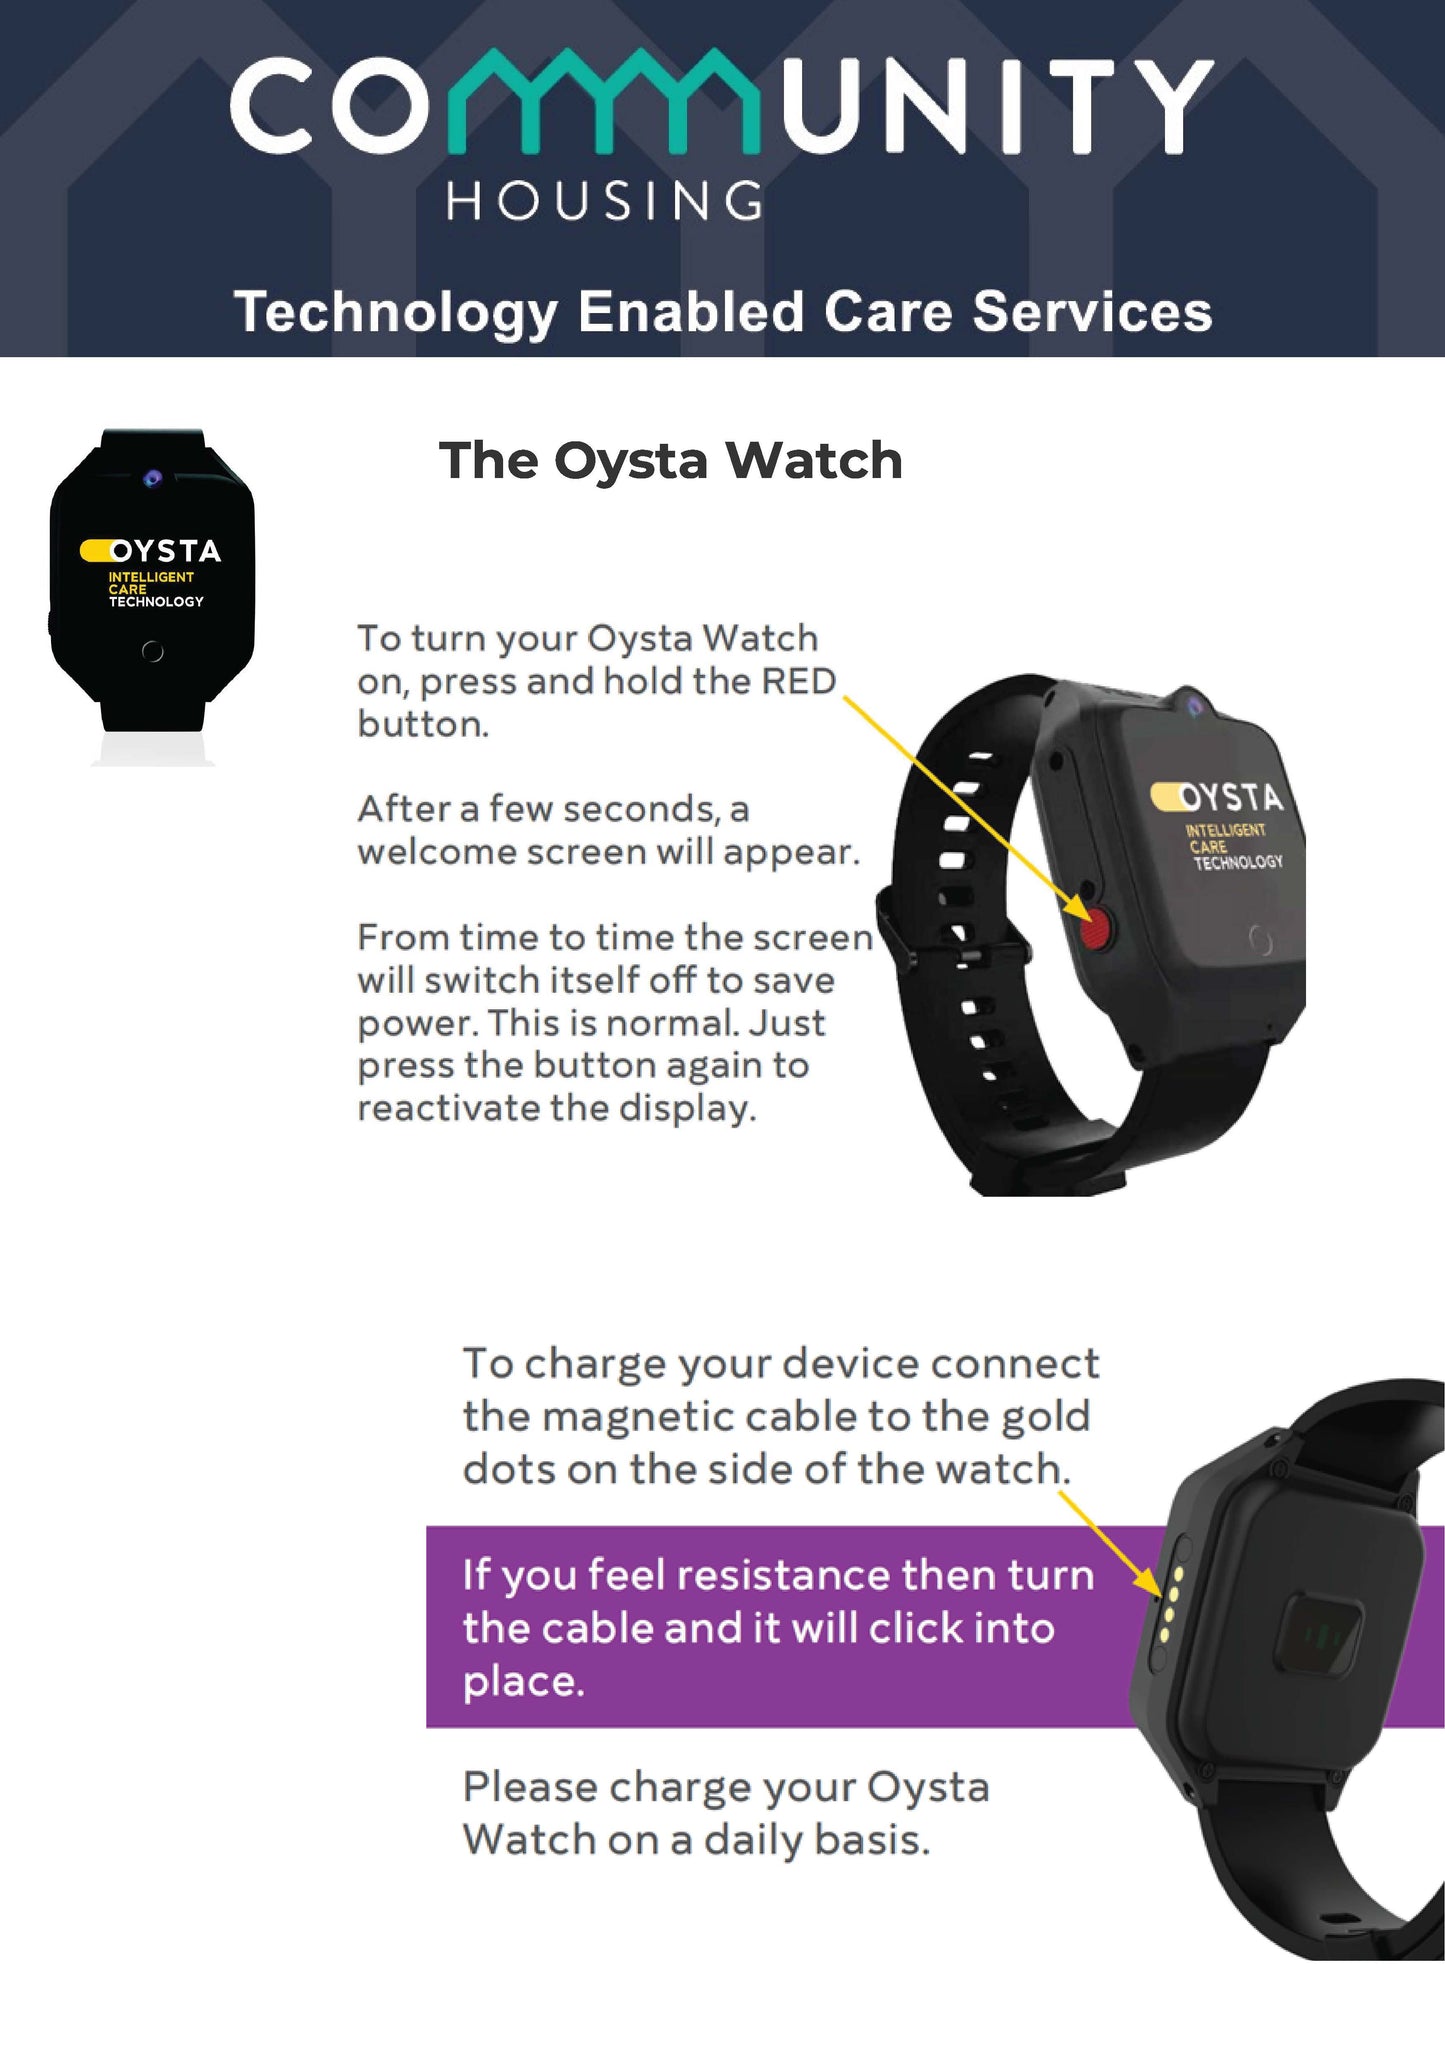 The Oysta Watch